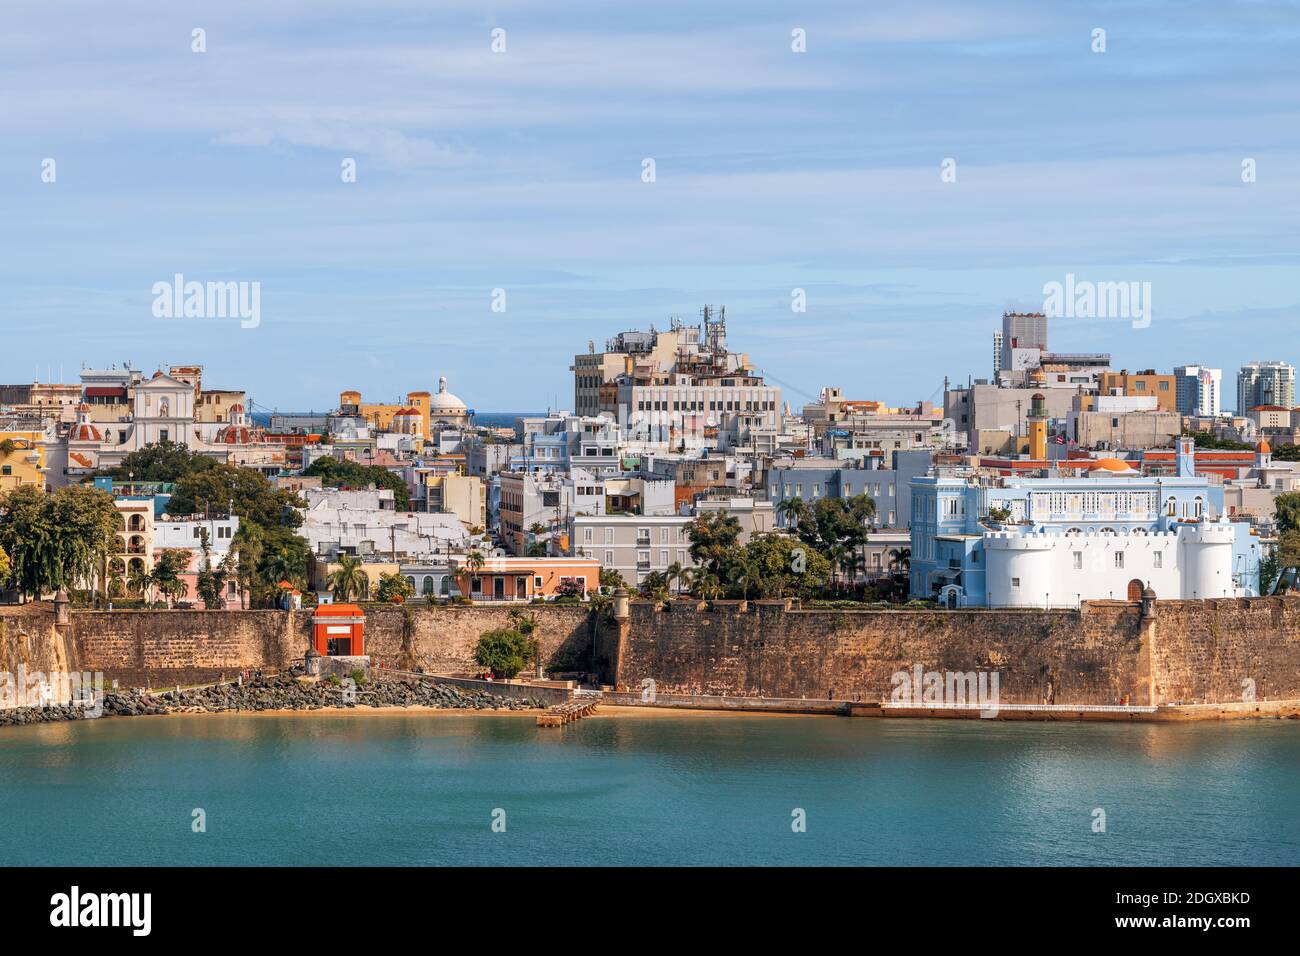 Old San Juan, Puerto Rico paesaggio urbano sull'acqua nei Caraibi. Foto Stock